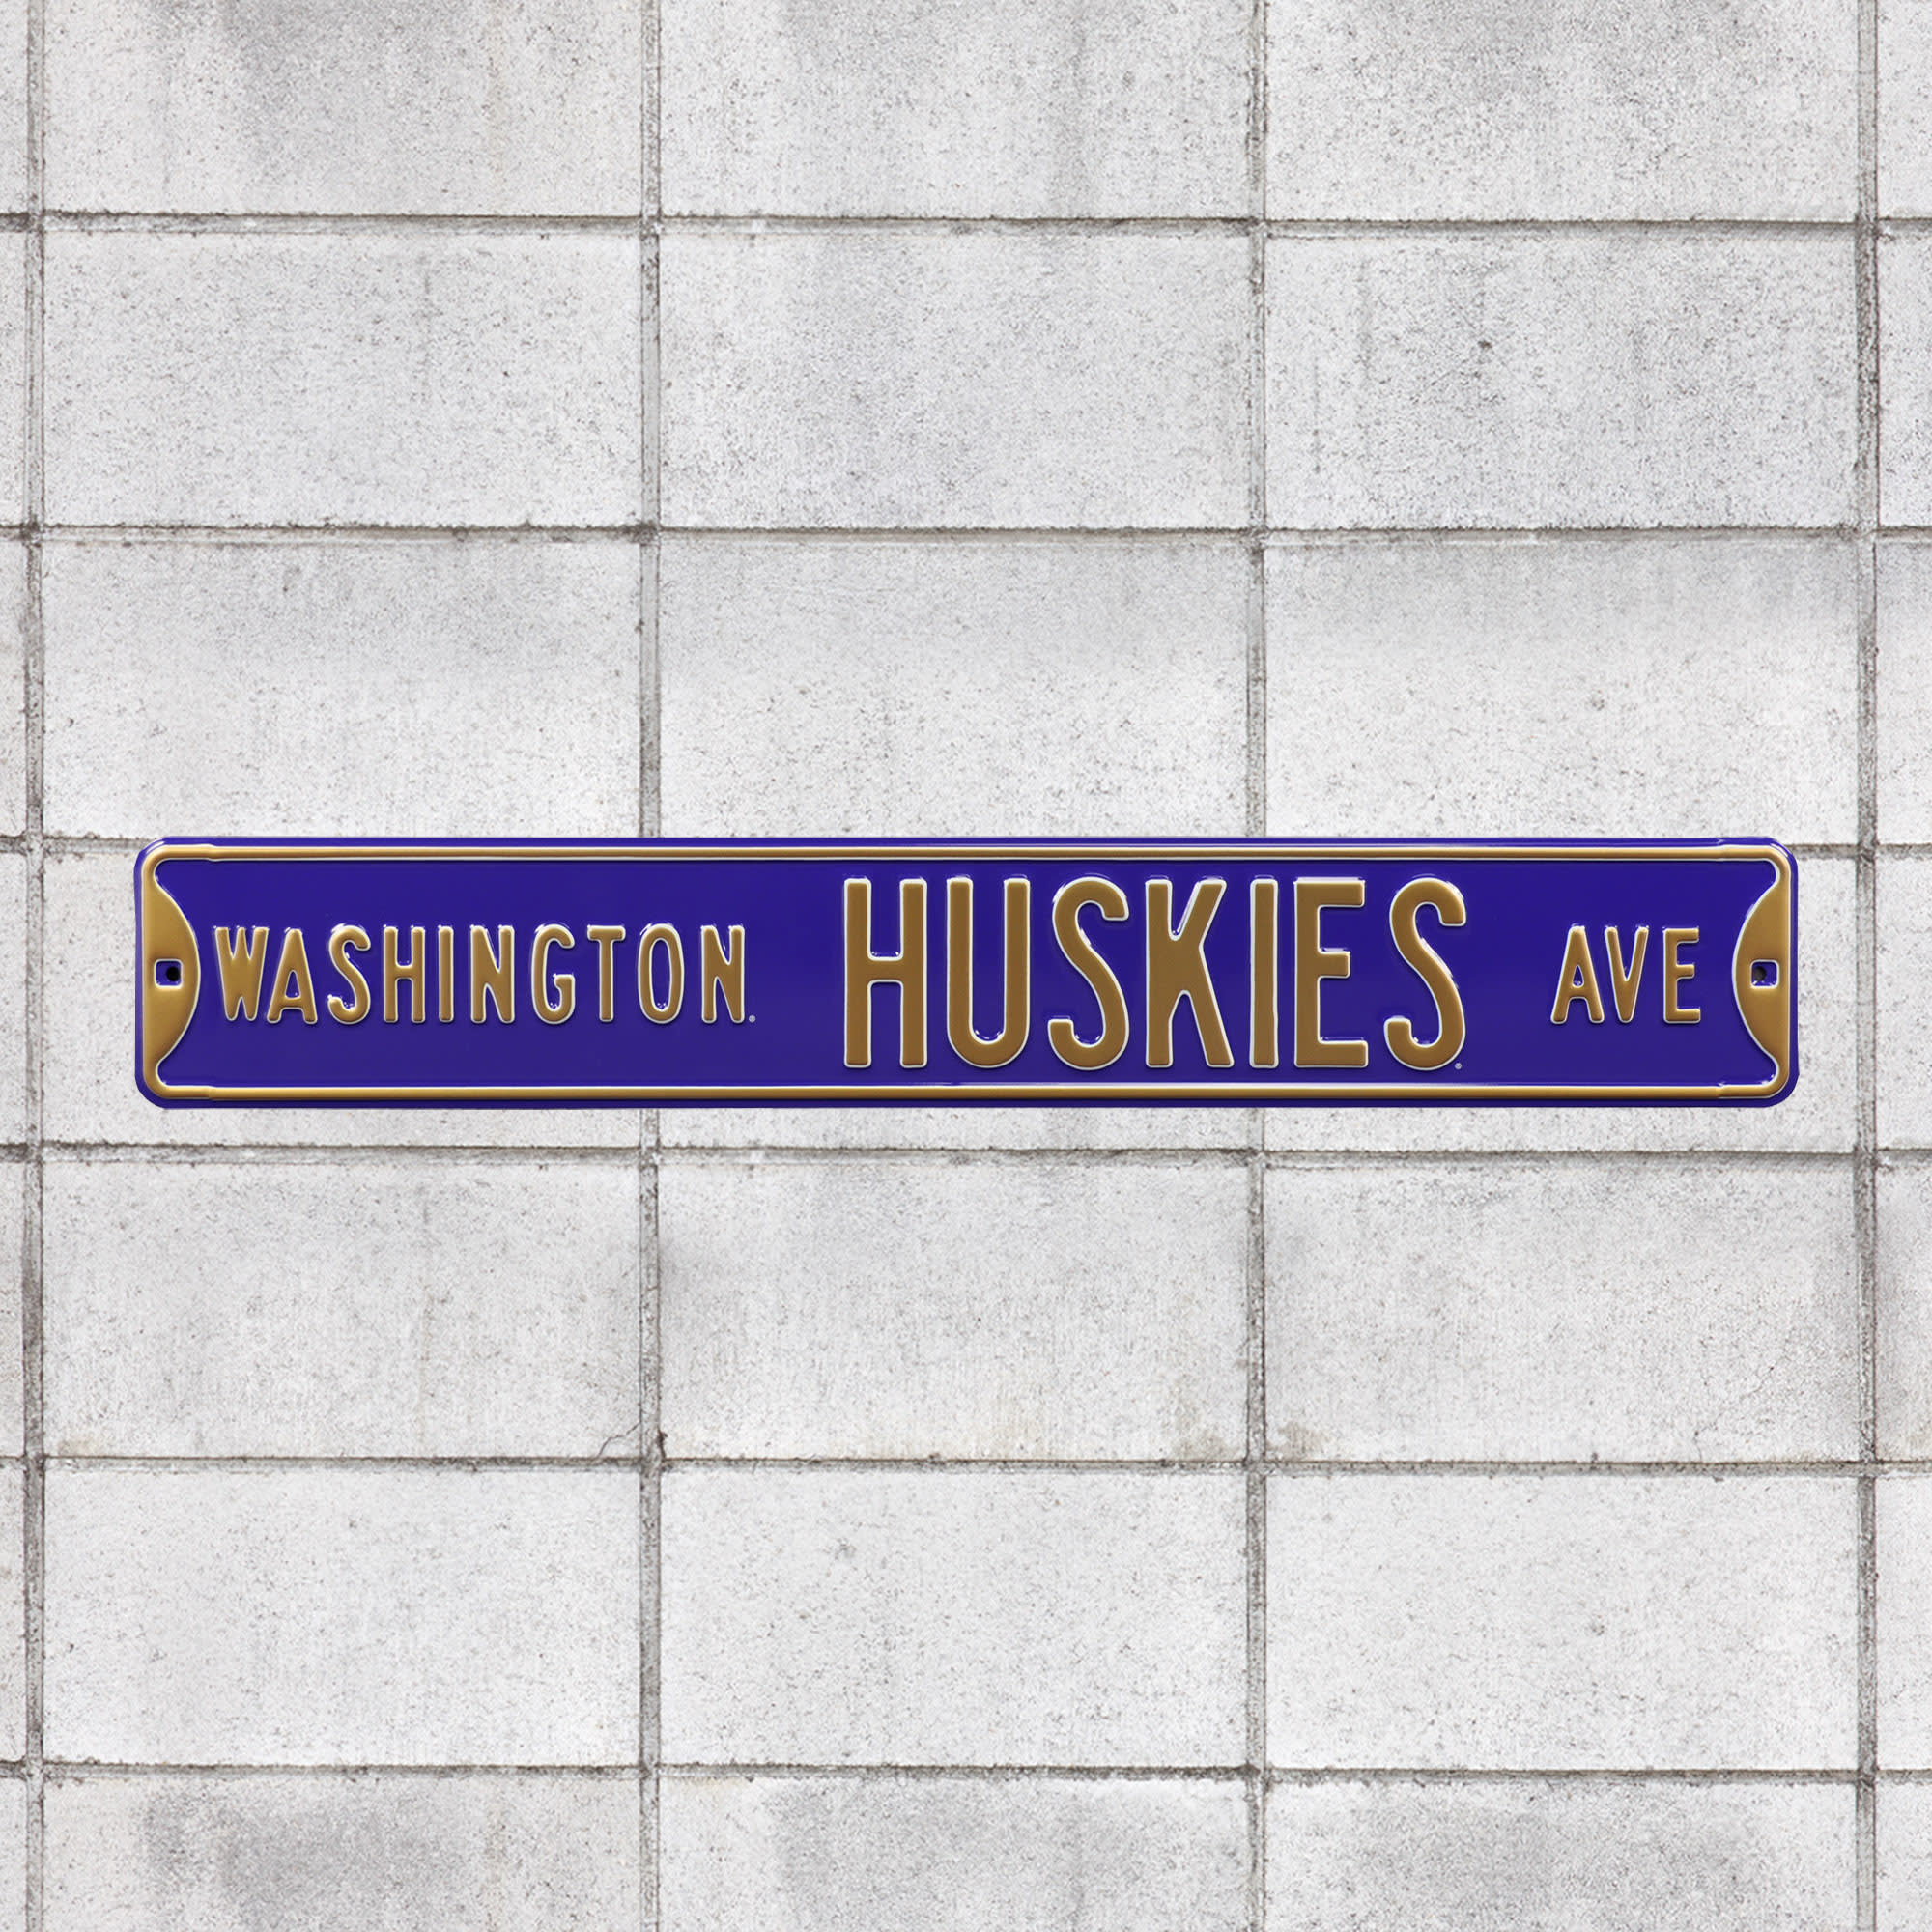 Washington Huskies: Washington Huskies Avenue - Officially Licensed Metal Street Sign 36.0"W x 6.0"H by Fathead | 100% Steel